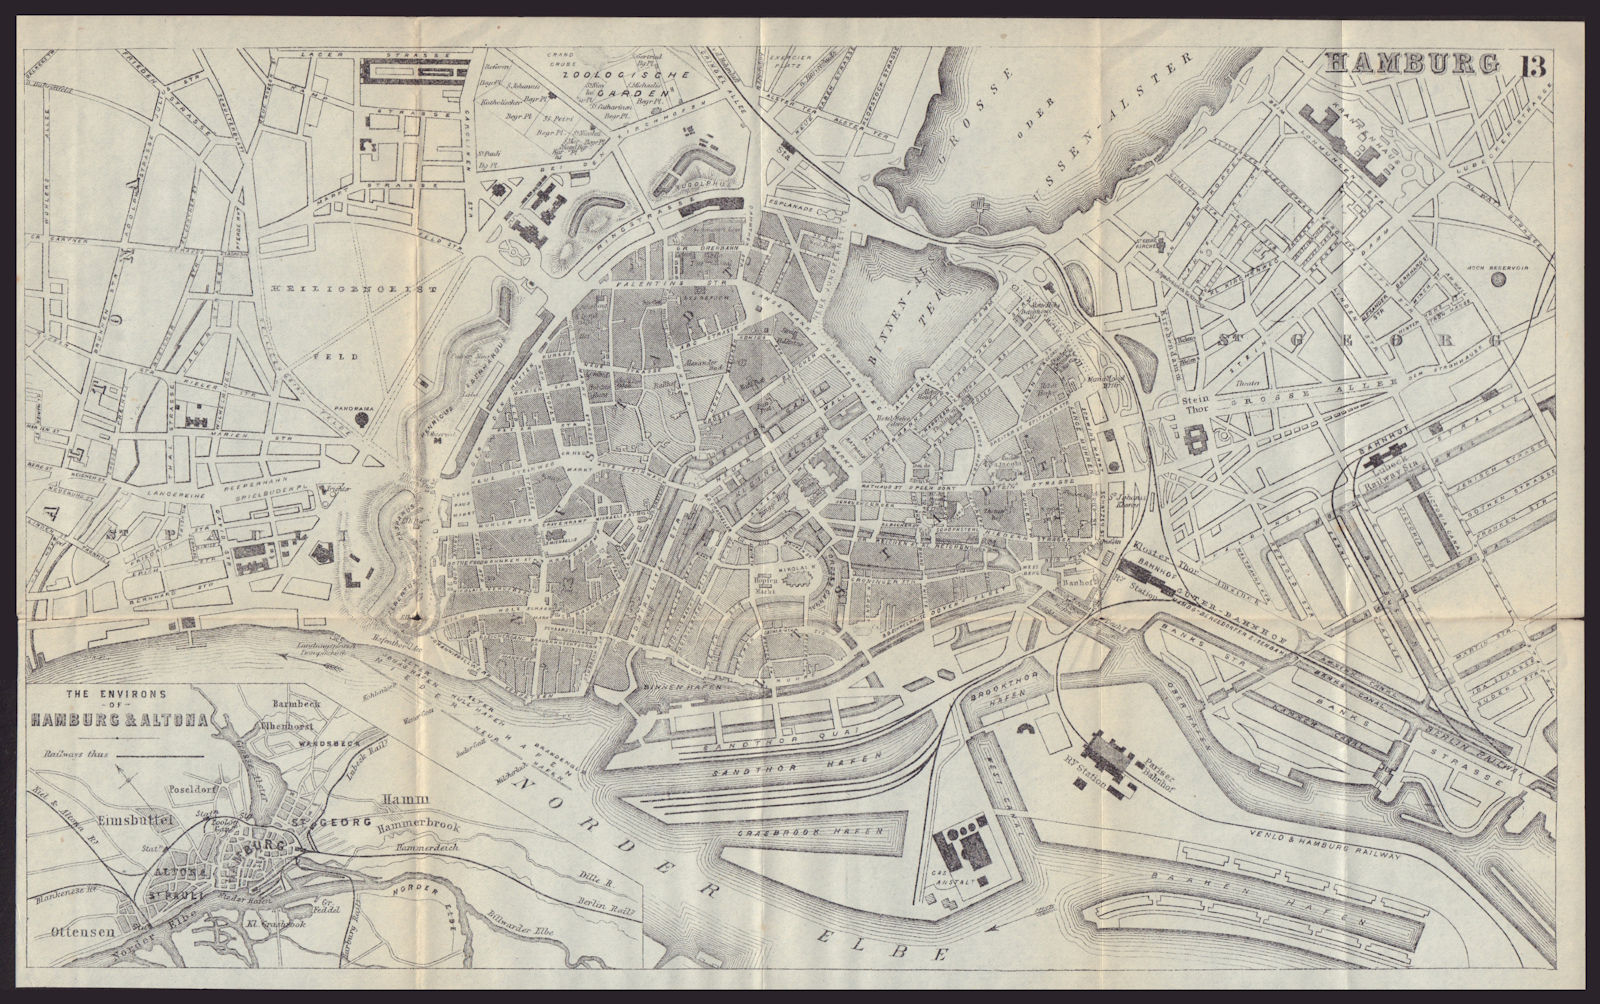 HAMBURG antique town plan city map. Germany. BRADSHAW 1892 old